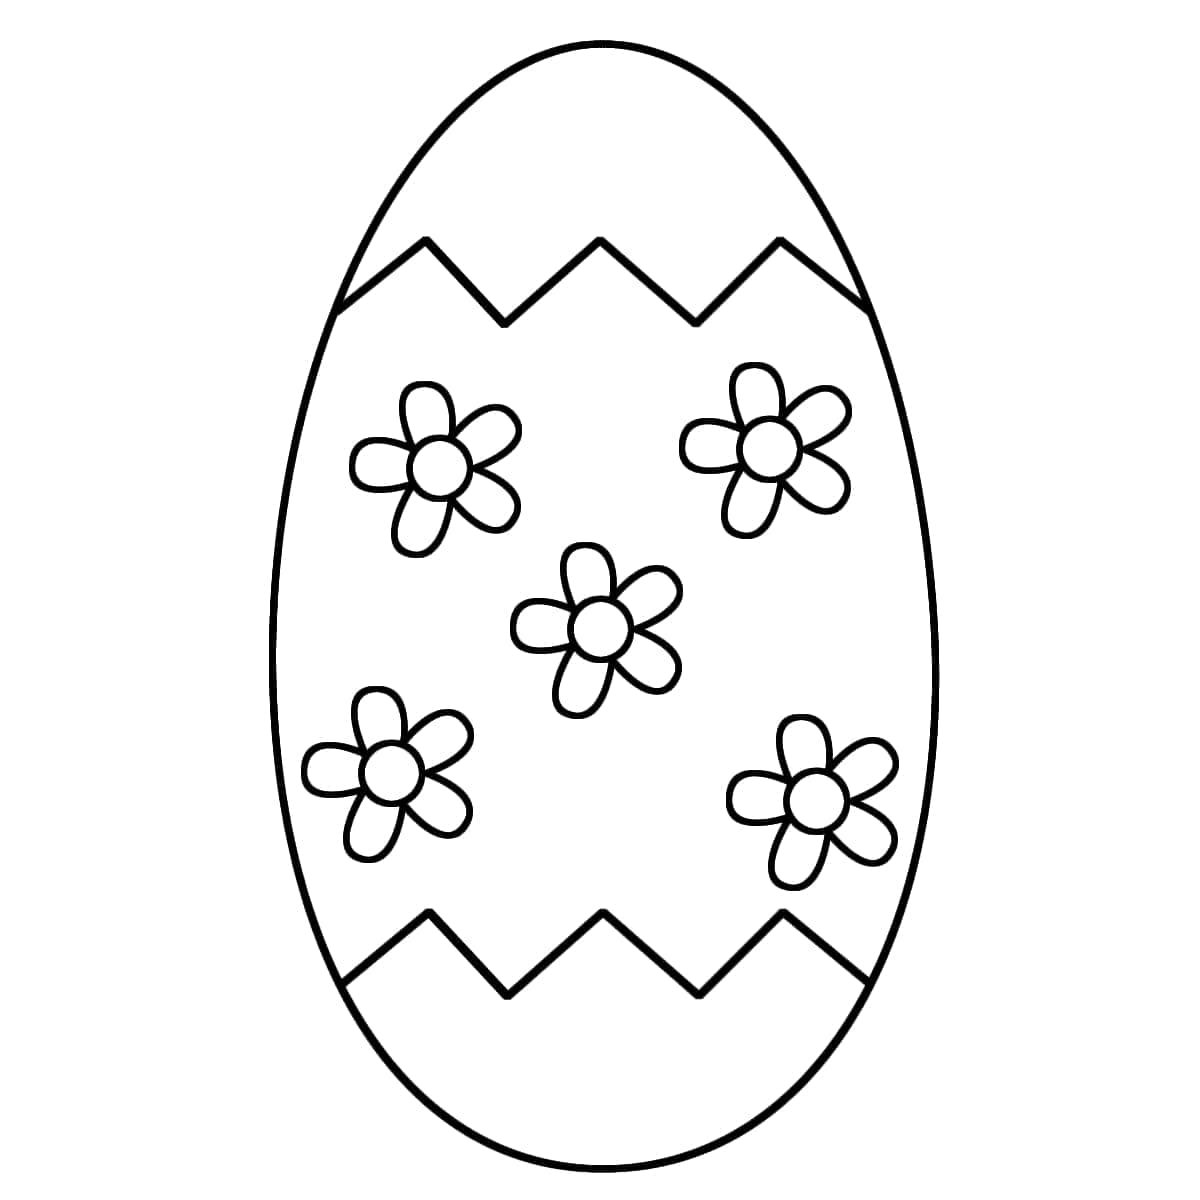 Трафареты пасхальных яиц для раскрашивания